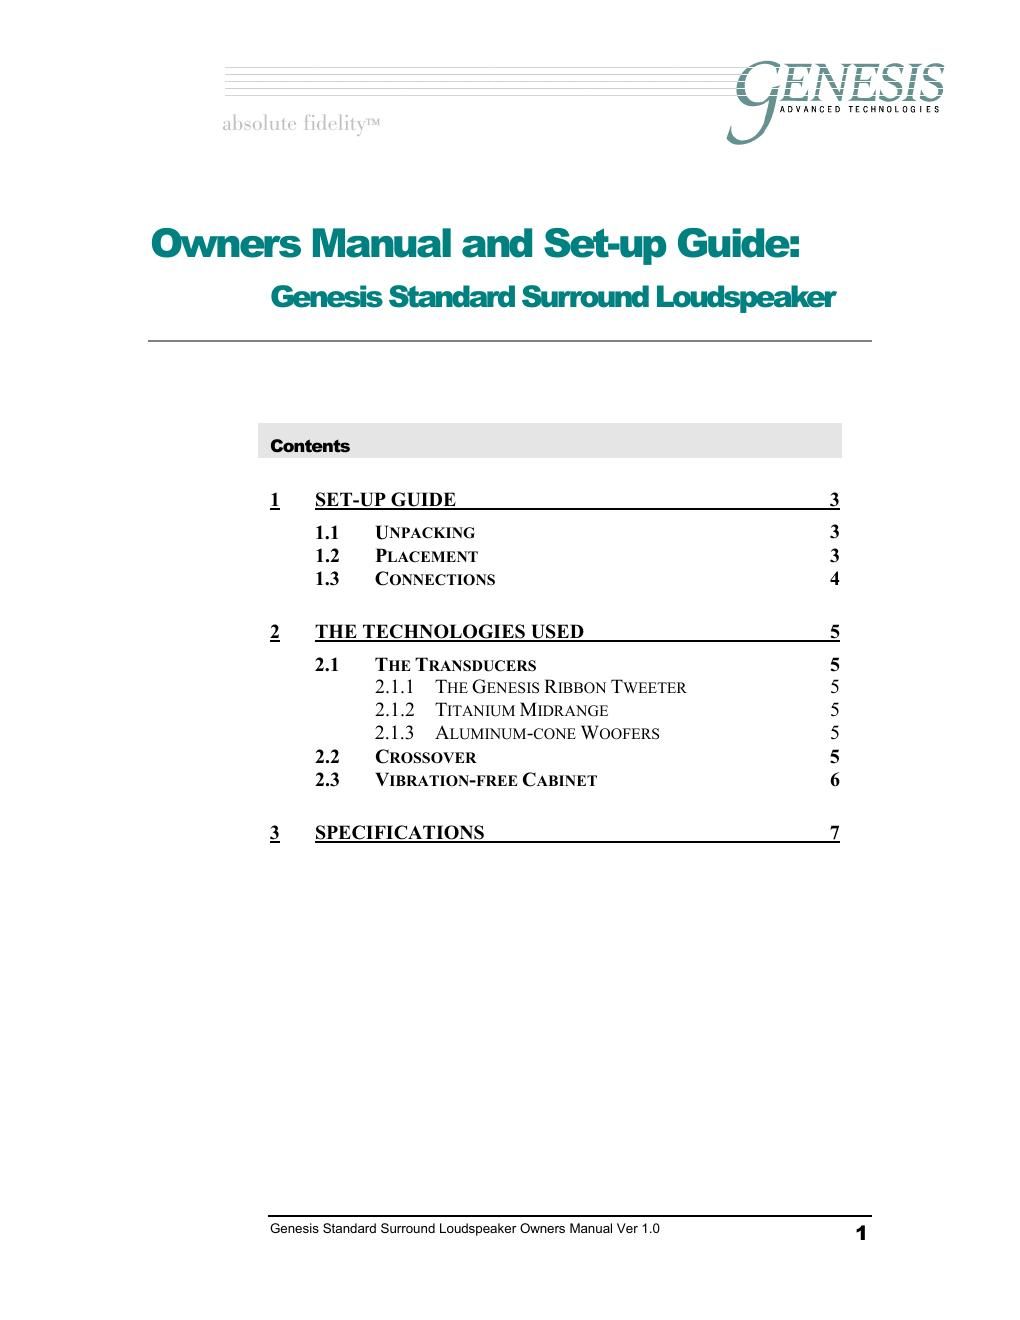 genesis sr 1 owners manual